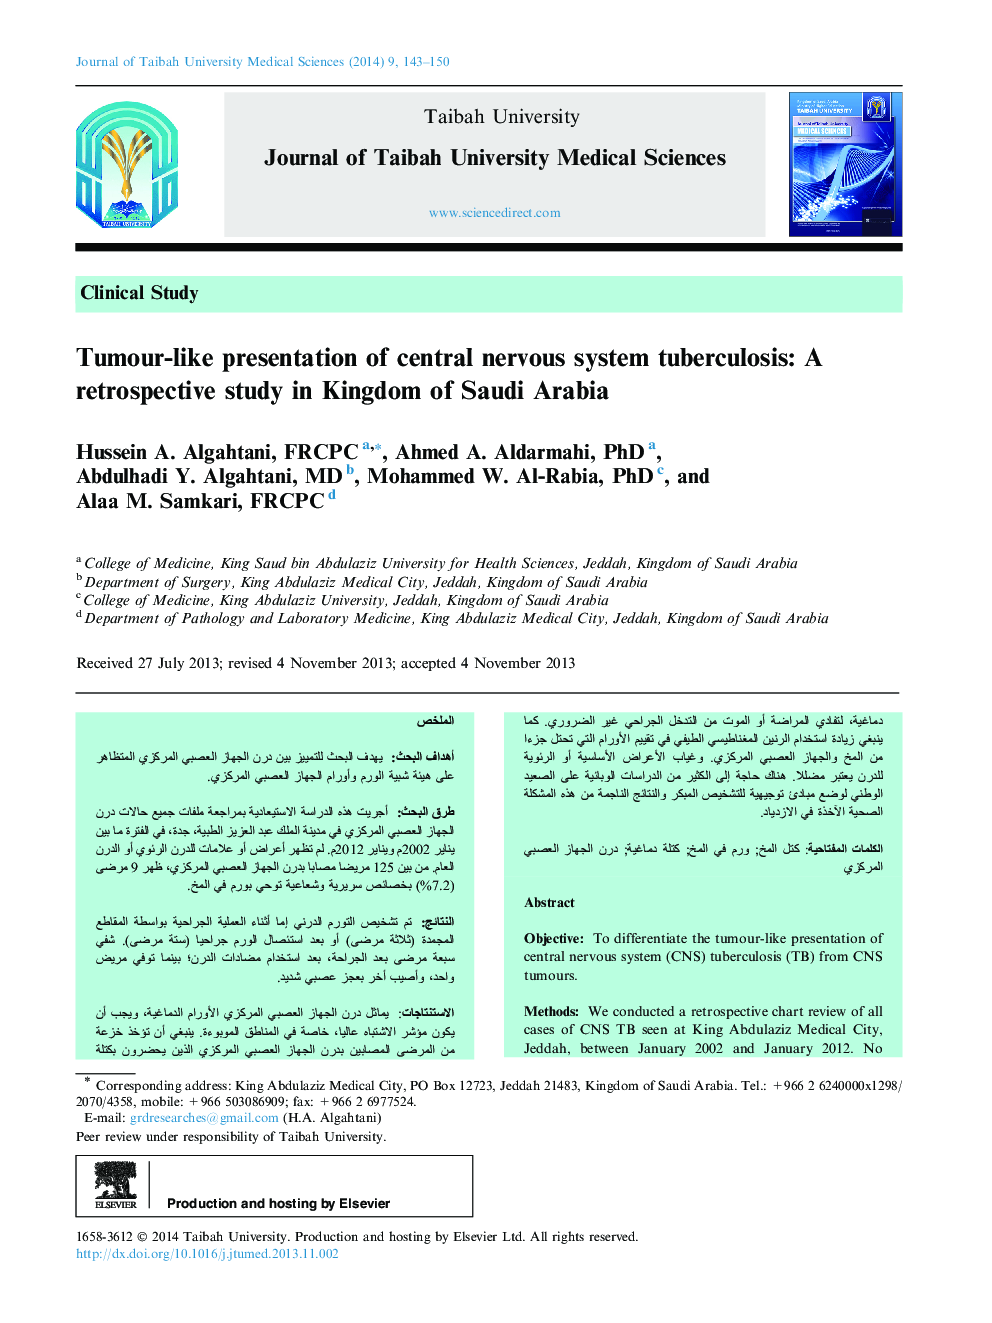 Tumour-like presentation of central nervous system tuberculosis: A retrospective study in Kingdom of Saudi Arabia 